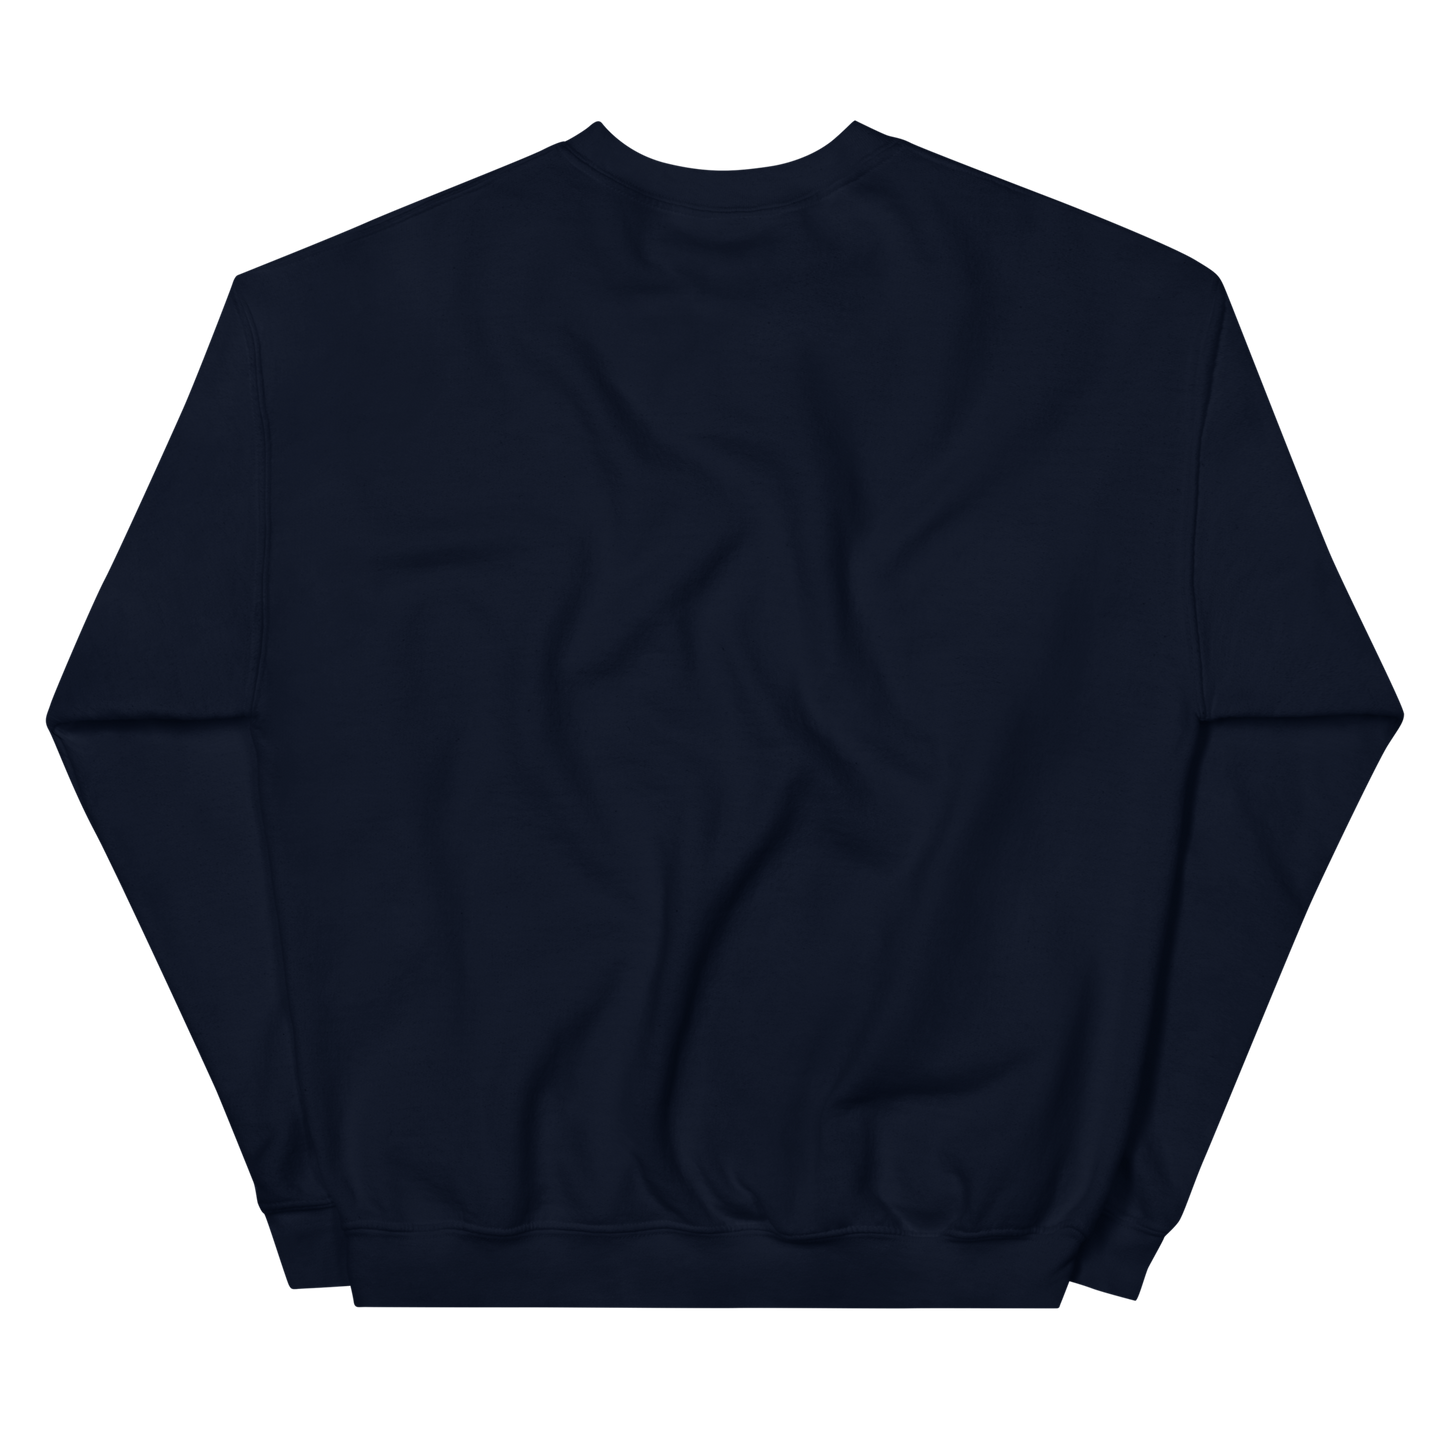 The Daily Mantras (Versio 1) - Unisex Sweatshirt